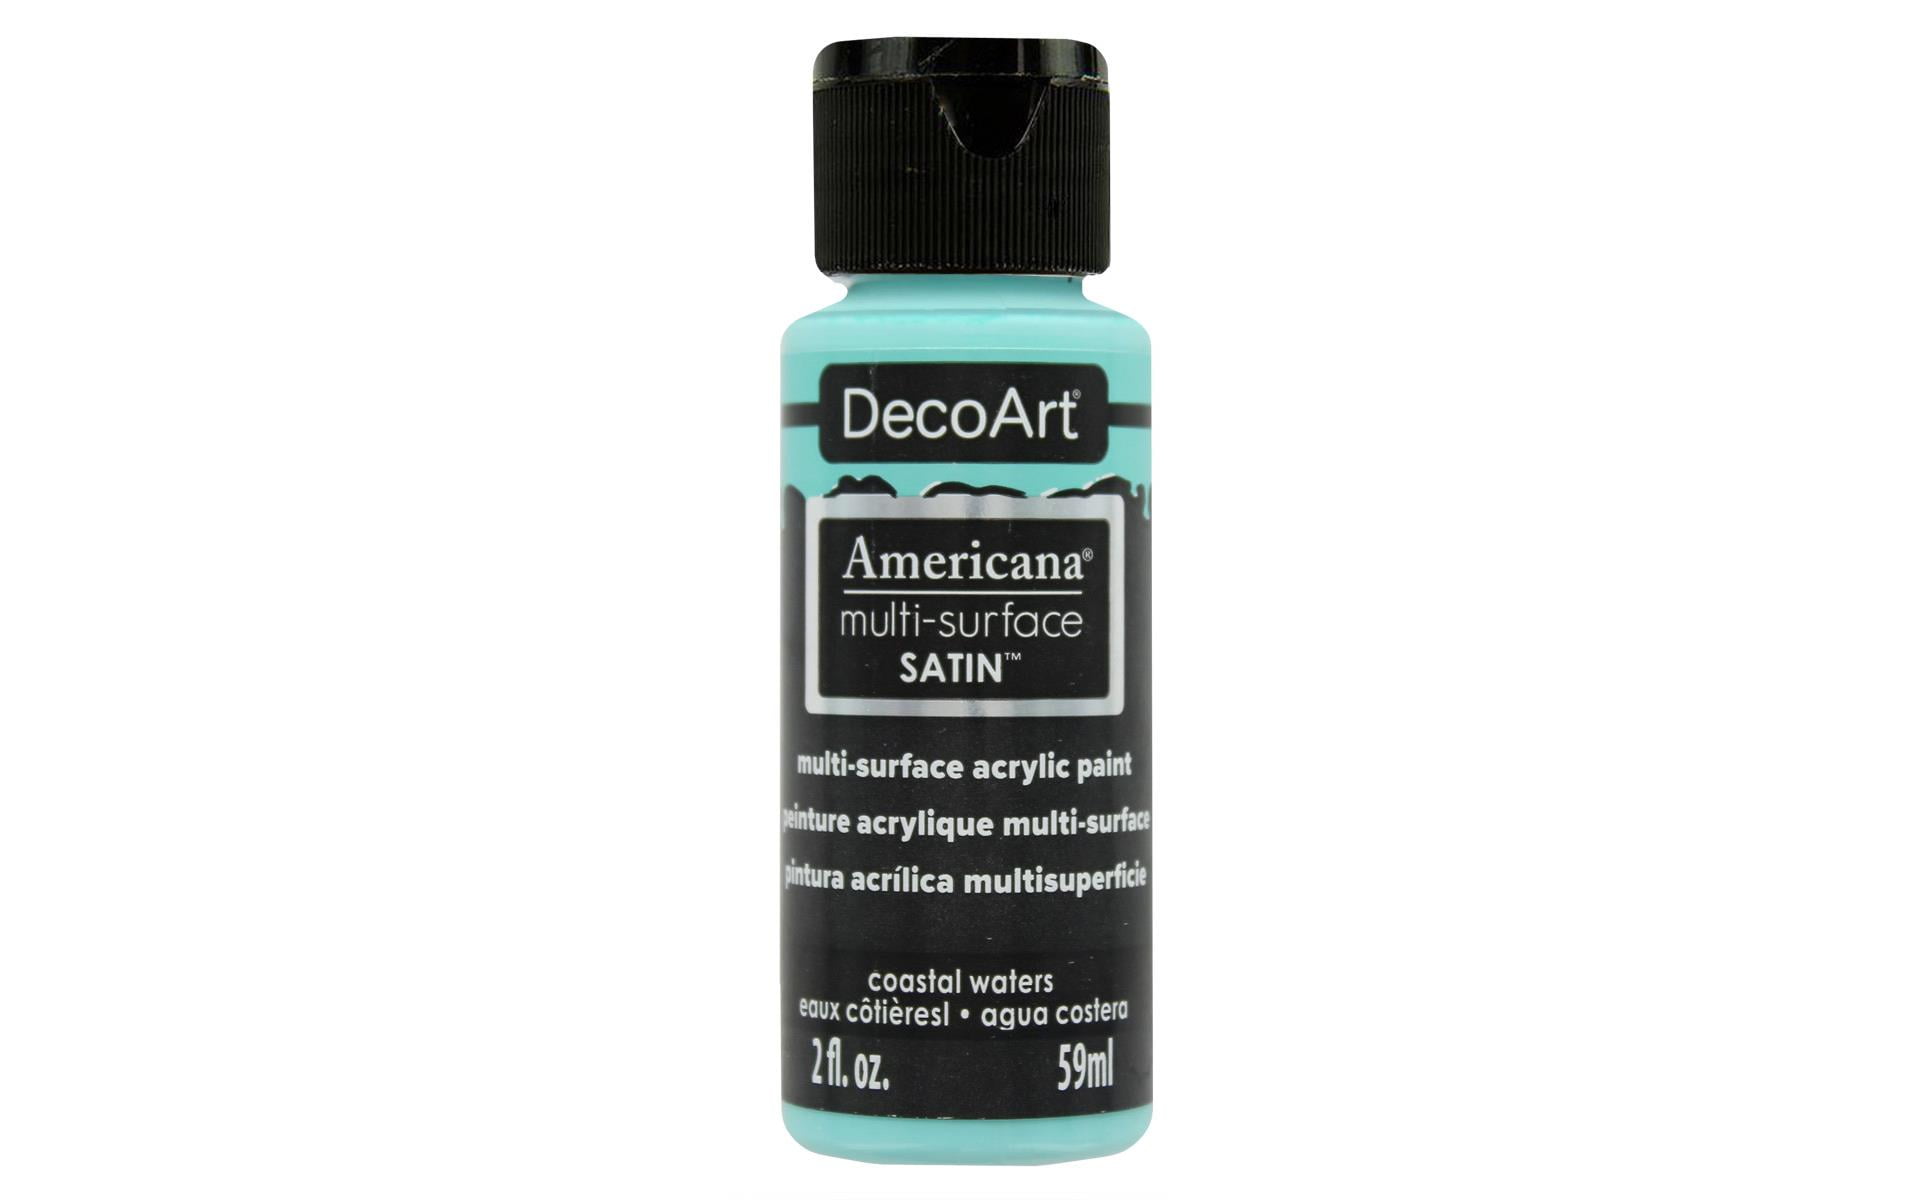 DecoArt Americana Acrylic Paint - 2 fl oz- Light Mocha, Sea Glass, Oyster  Beige.